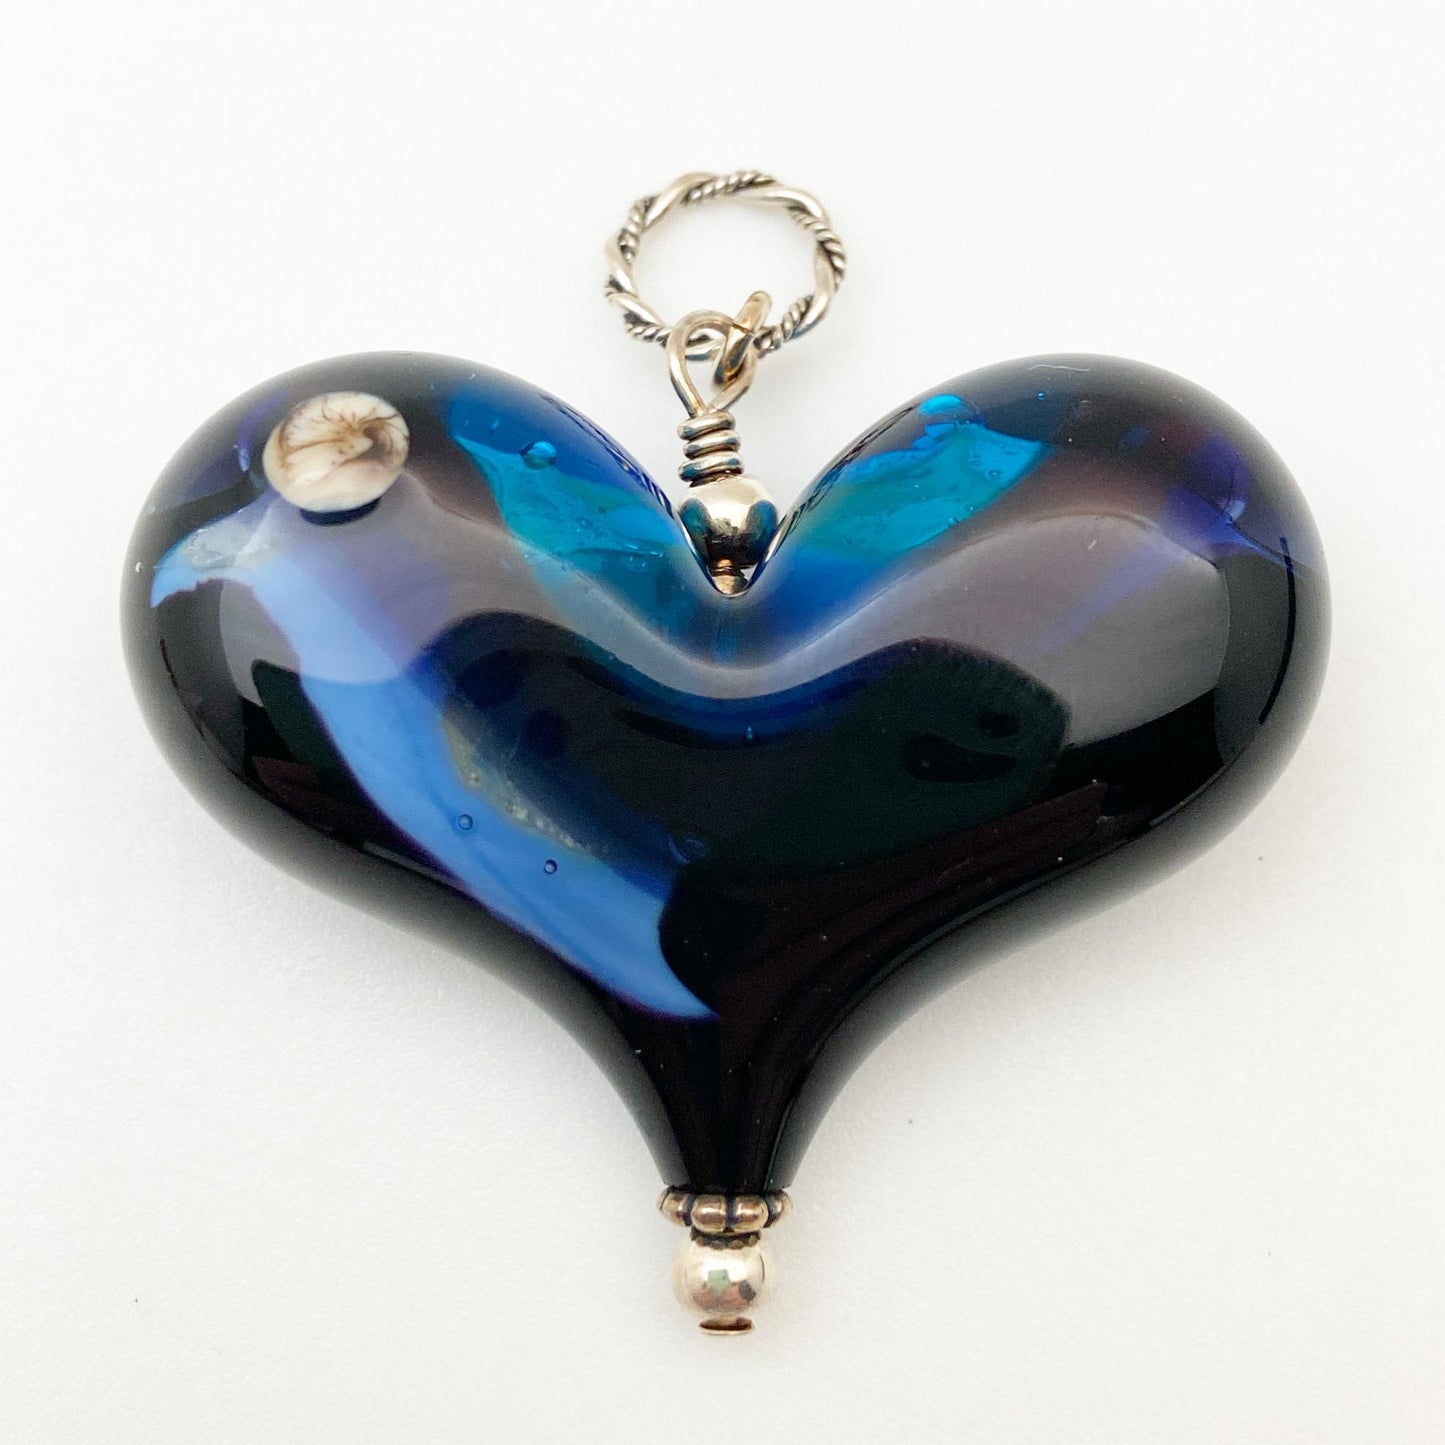 Pendant - Nightscape Heart with Moon #3 - Handmade Glass